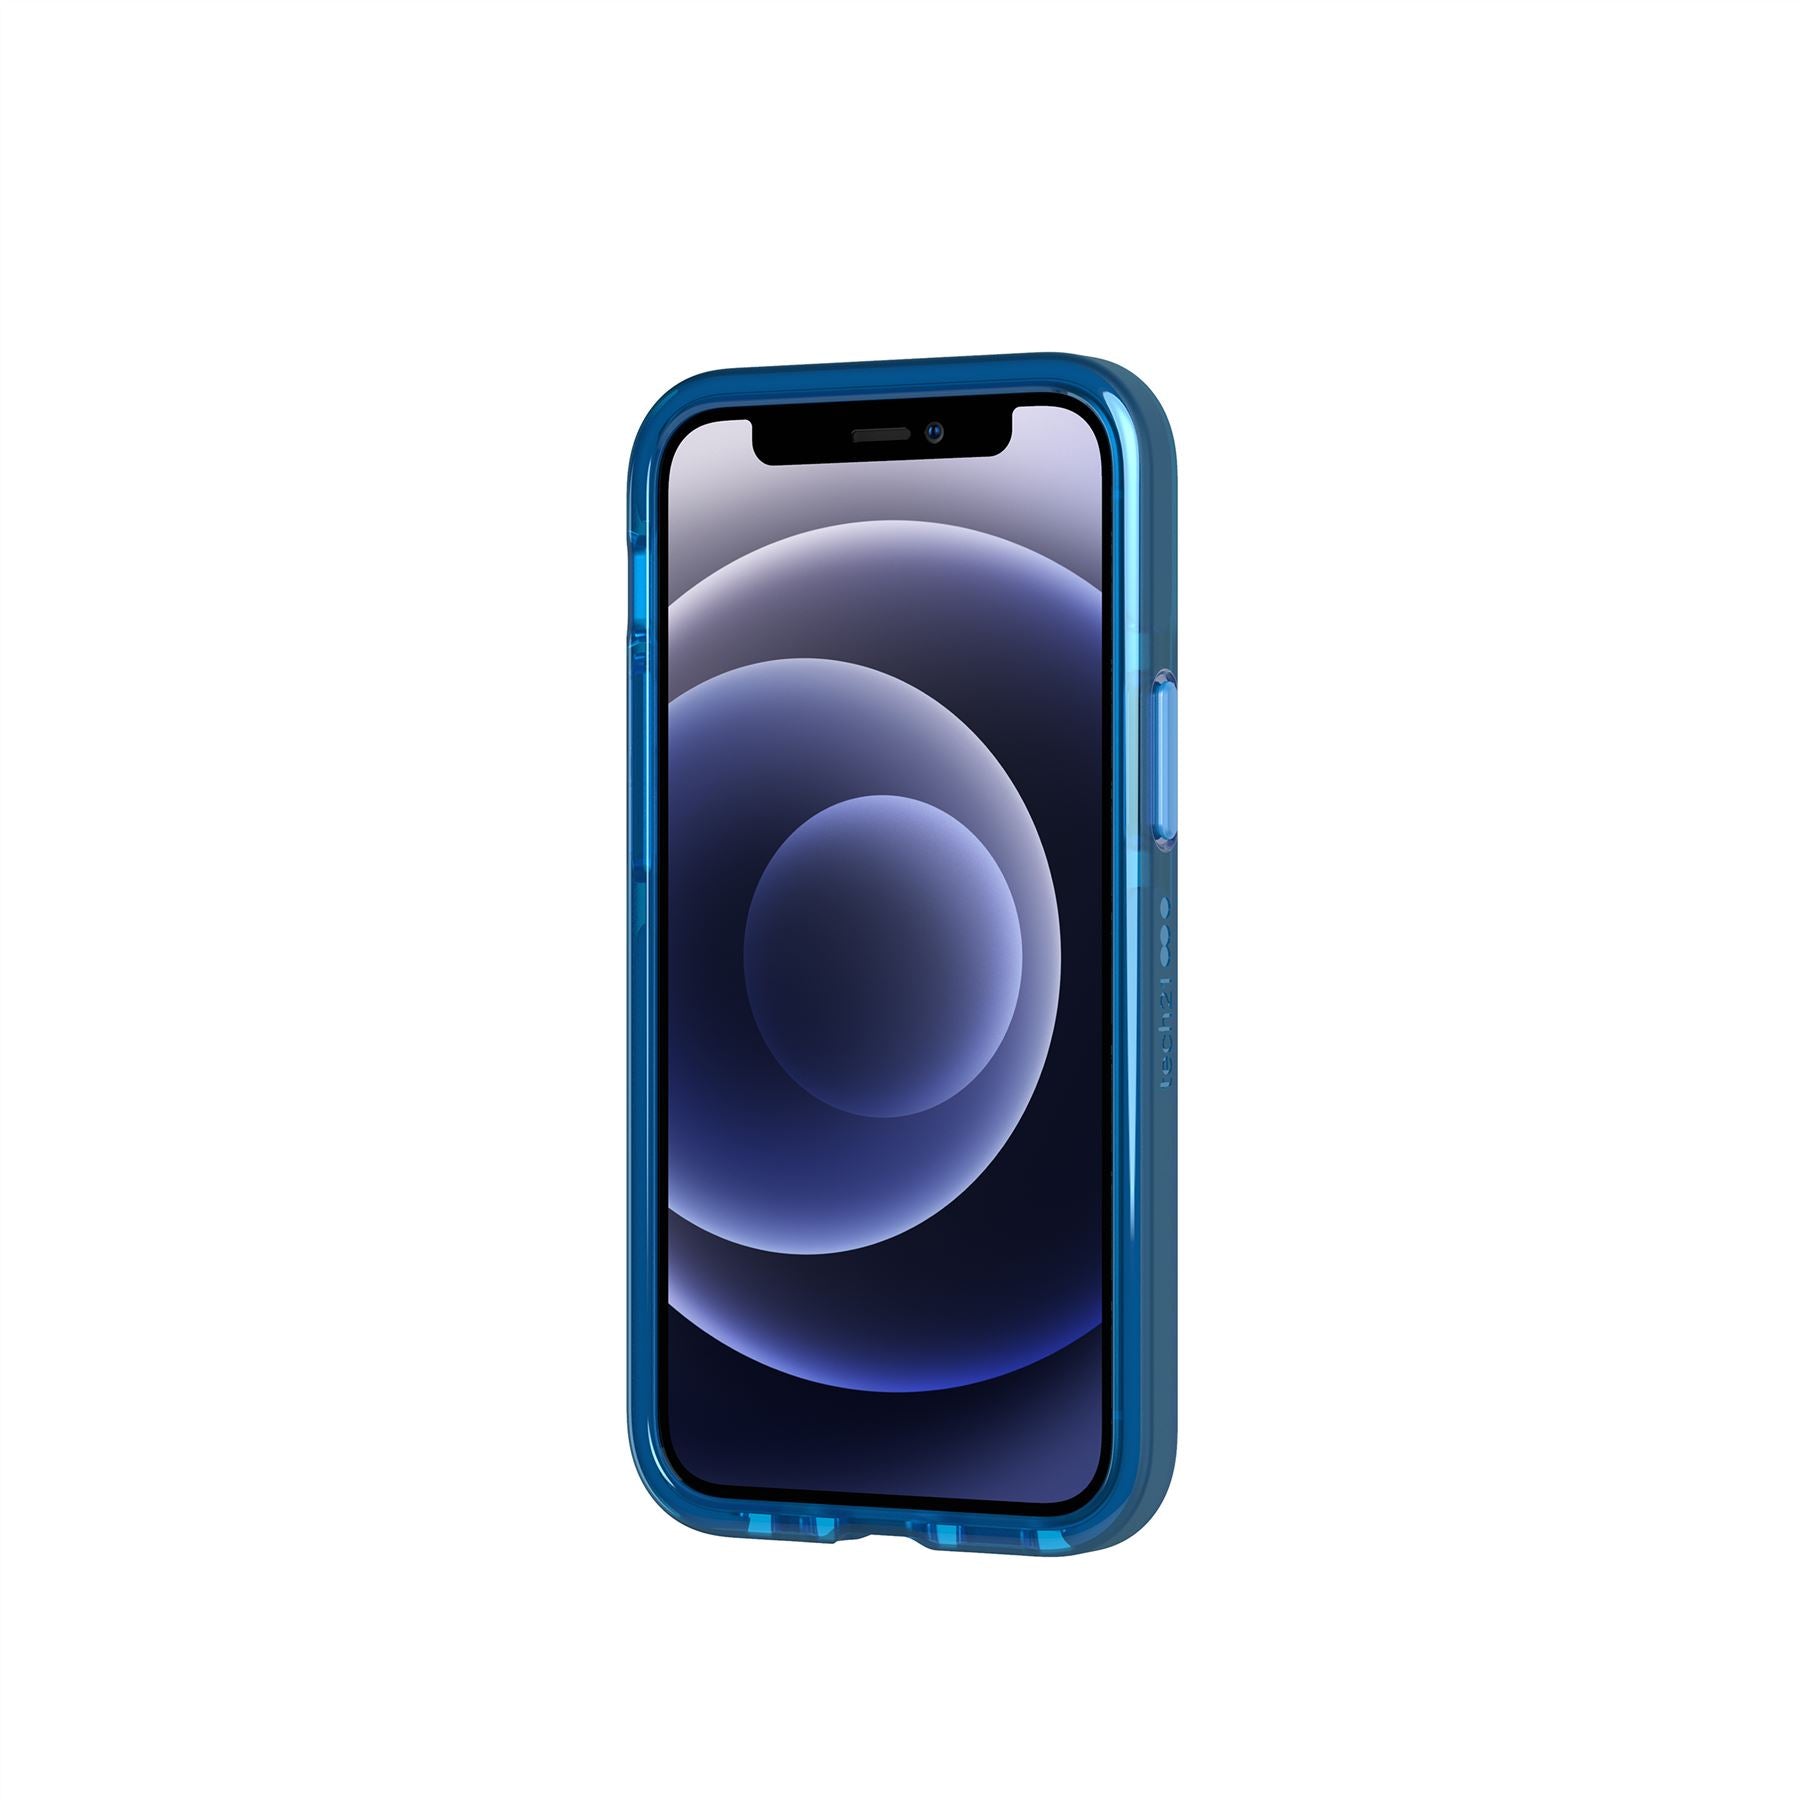 Evo Check - Apple iPhone 12 mini Case - Classic Blue